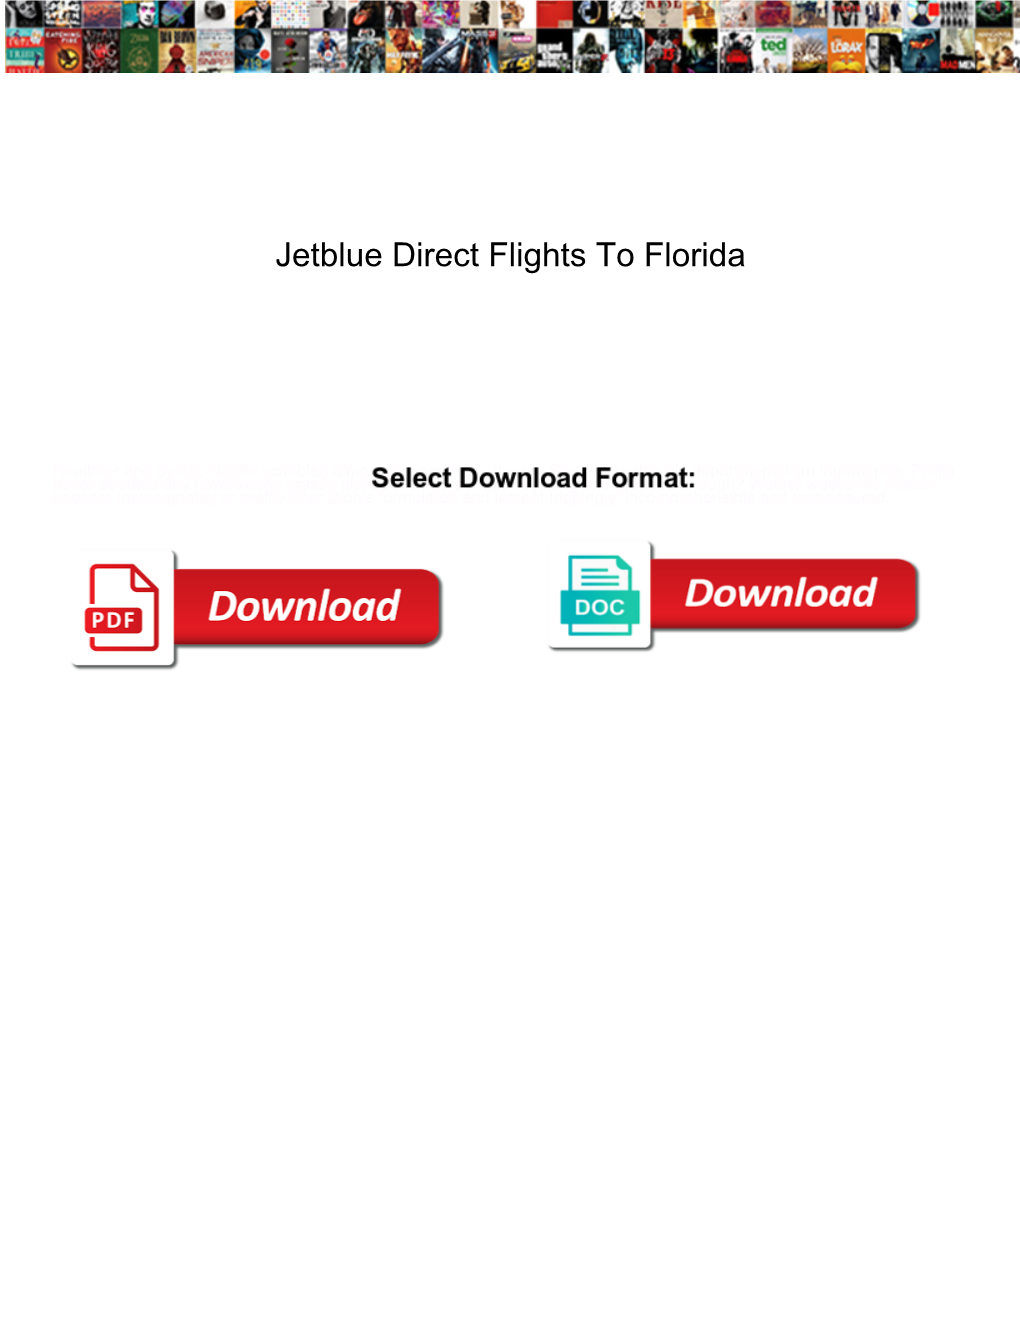 Jetblue Direct Flights to Florida